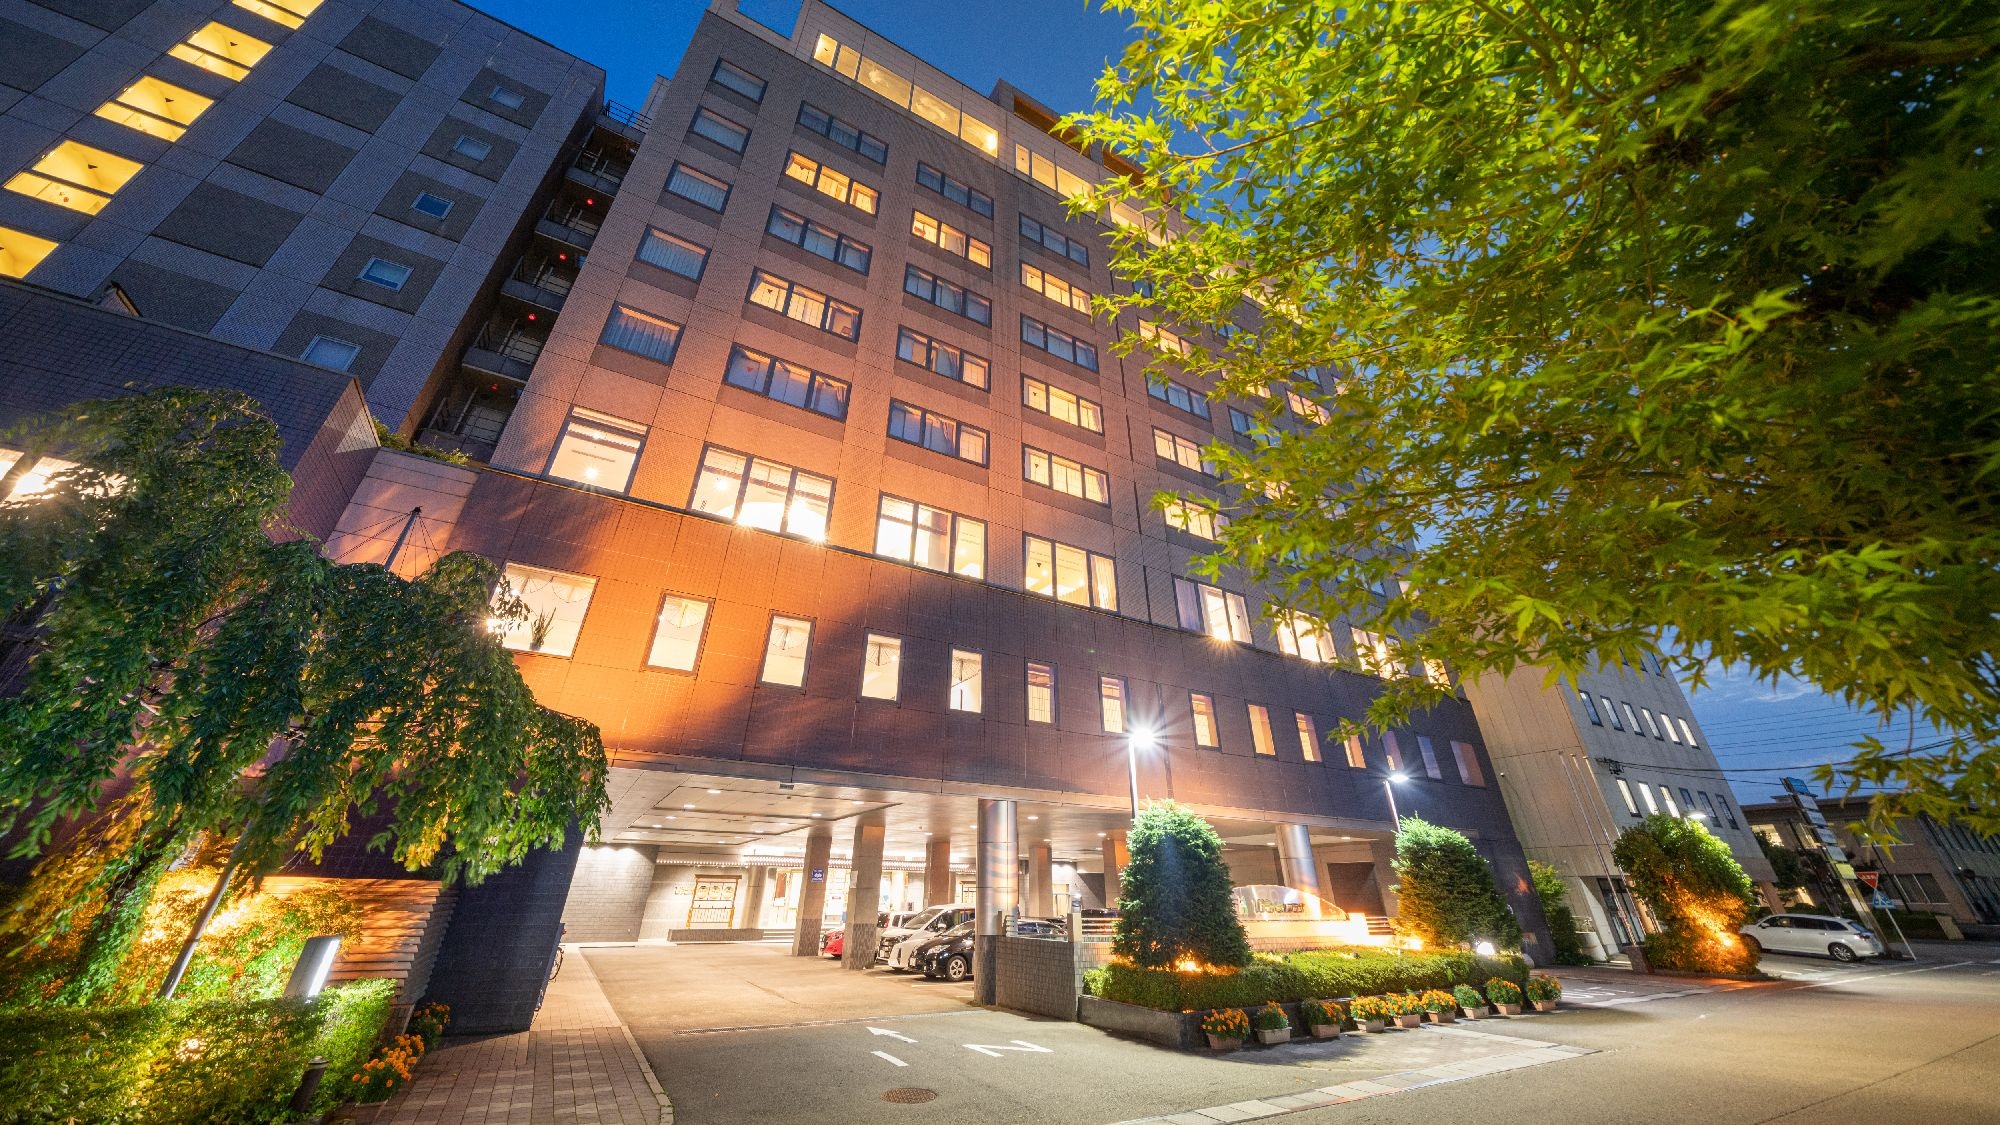 ◇ Hida Takayama Onsen / Hida Hotel Plaza / Full view (East Building and Kita Building)